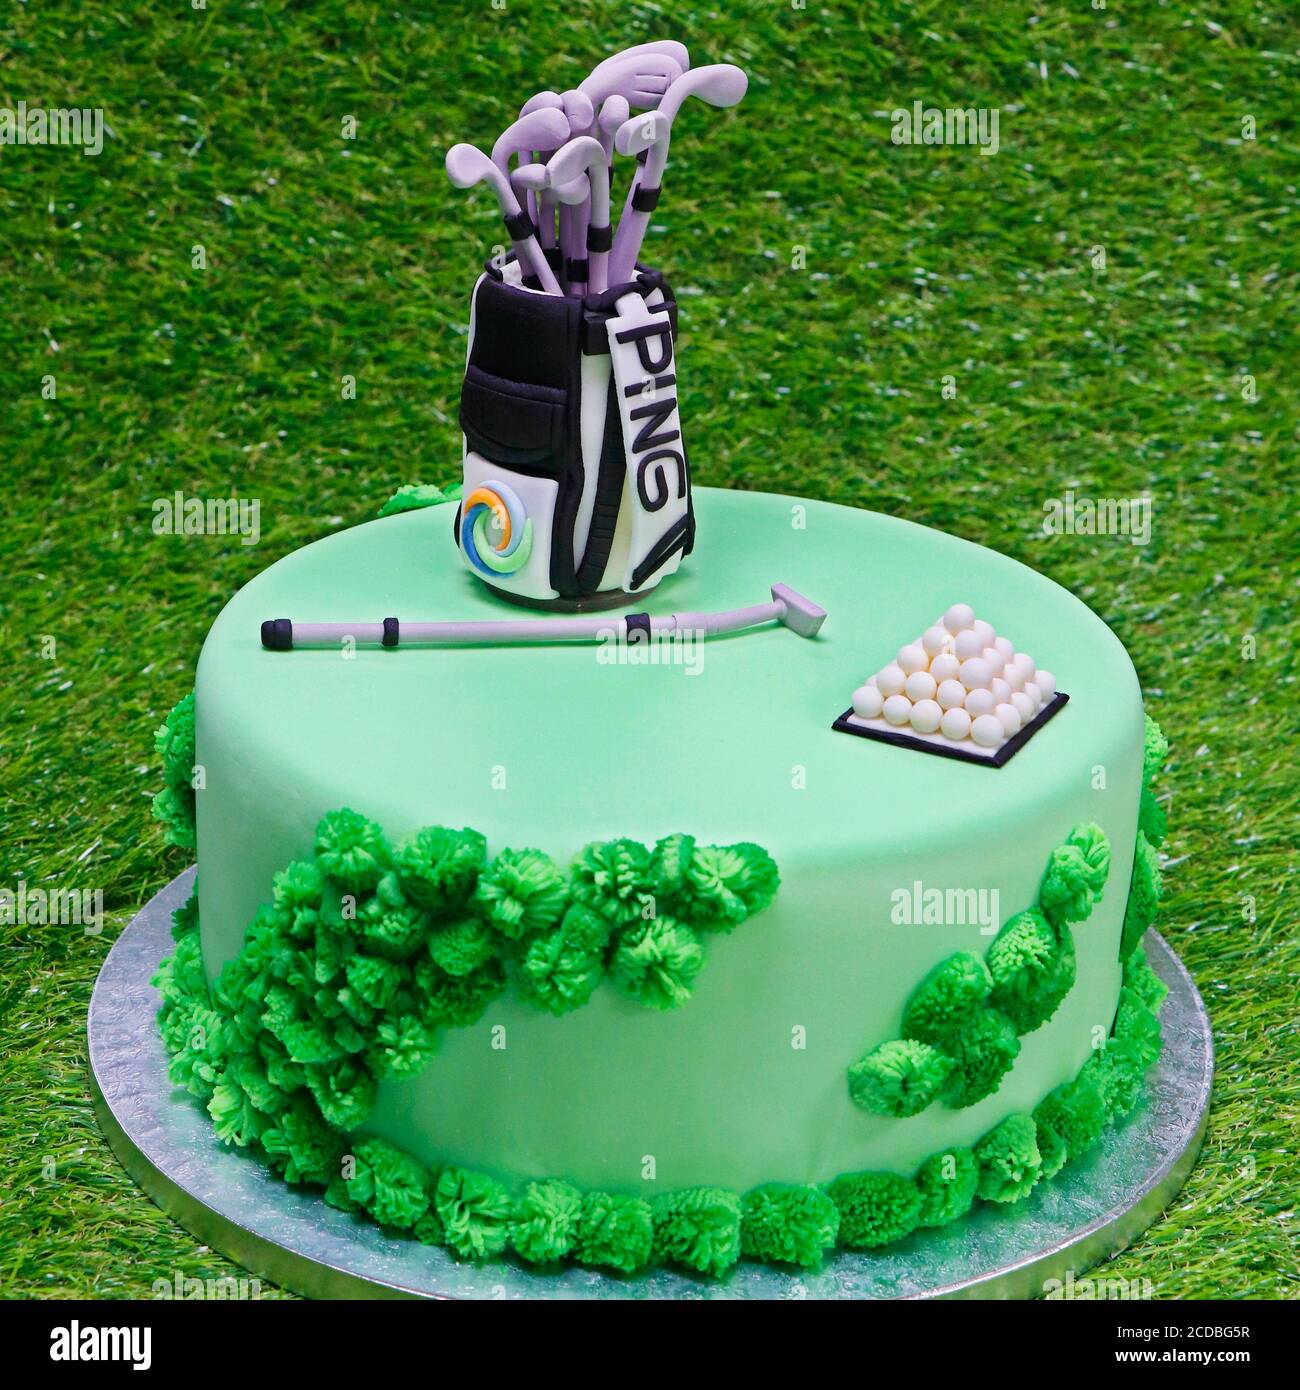 Dubai, United Arab Emirates - August 24, 2020 Designed birthday cake on a  green grass background, Golf theme Stock Photo - Alamy